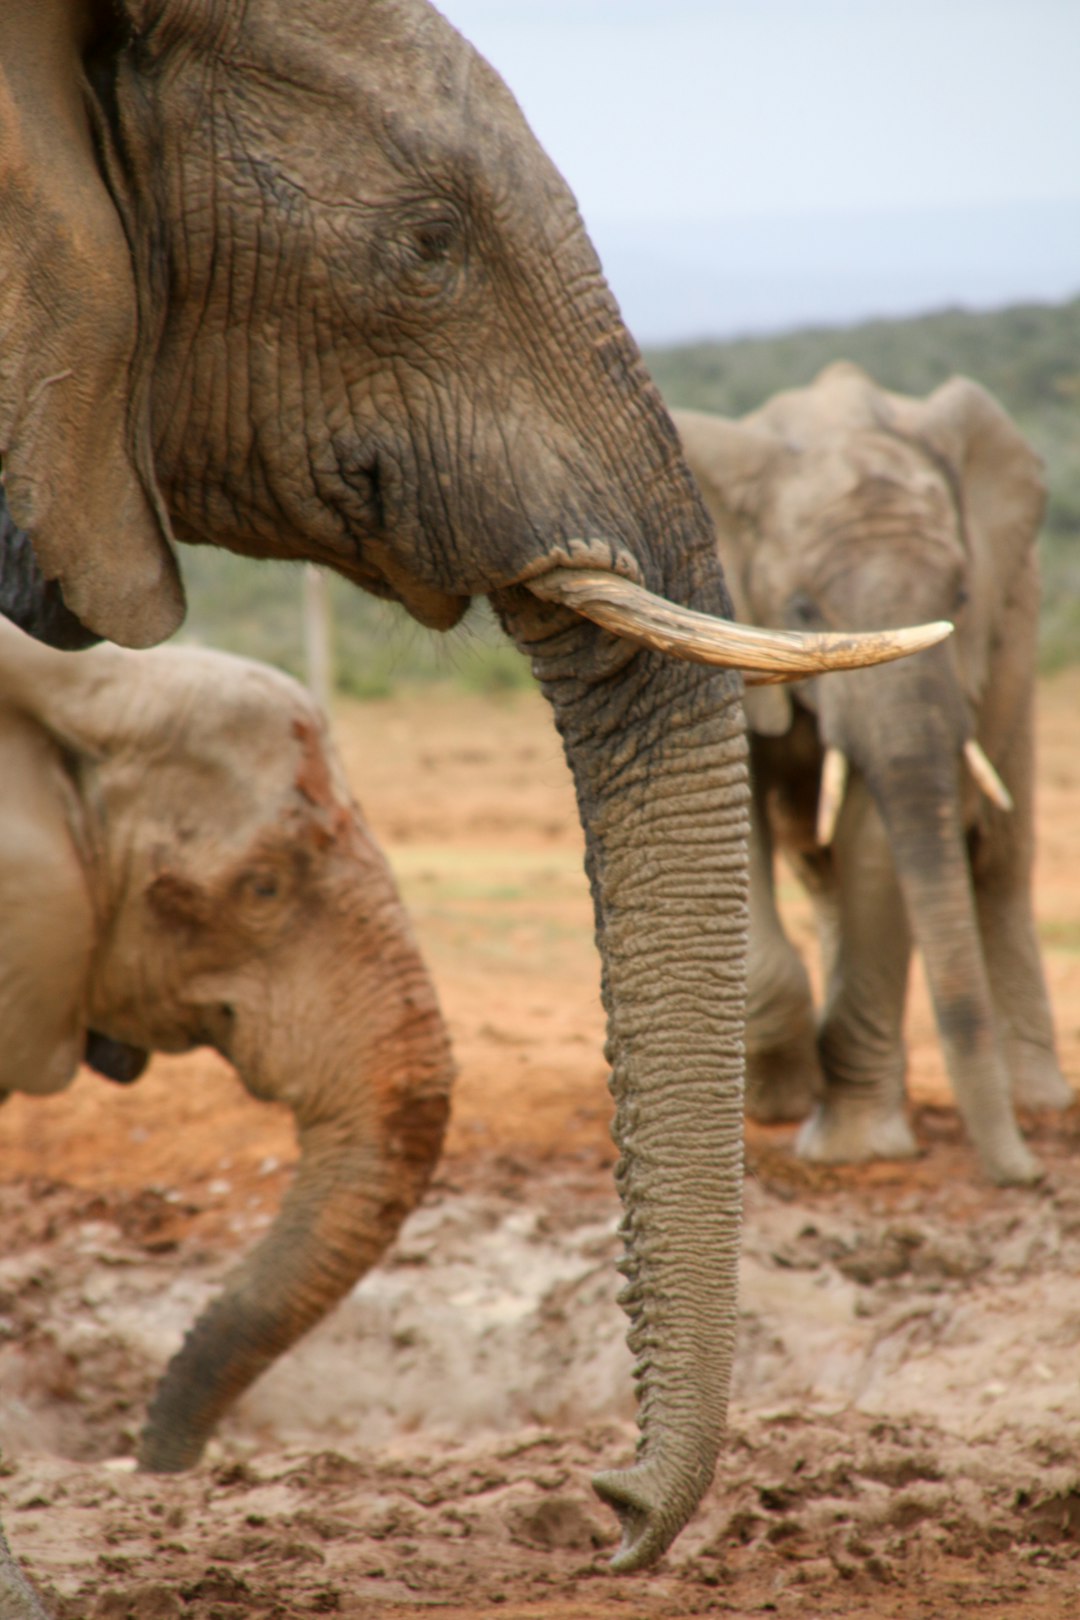 baby elephant walking on dirt ground during daytime